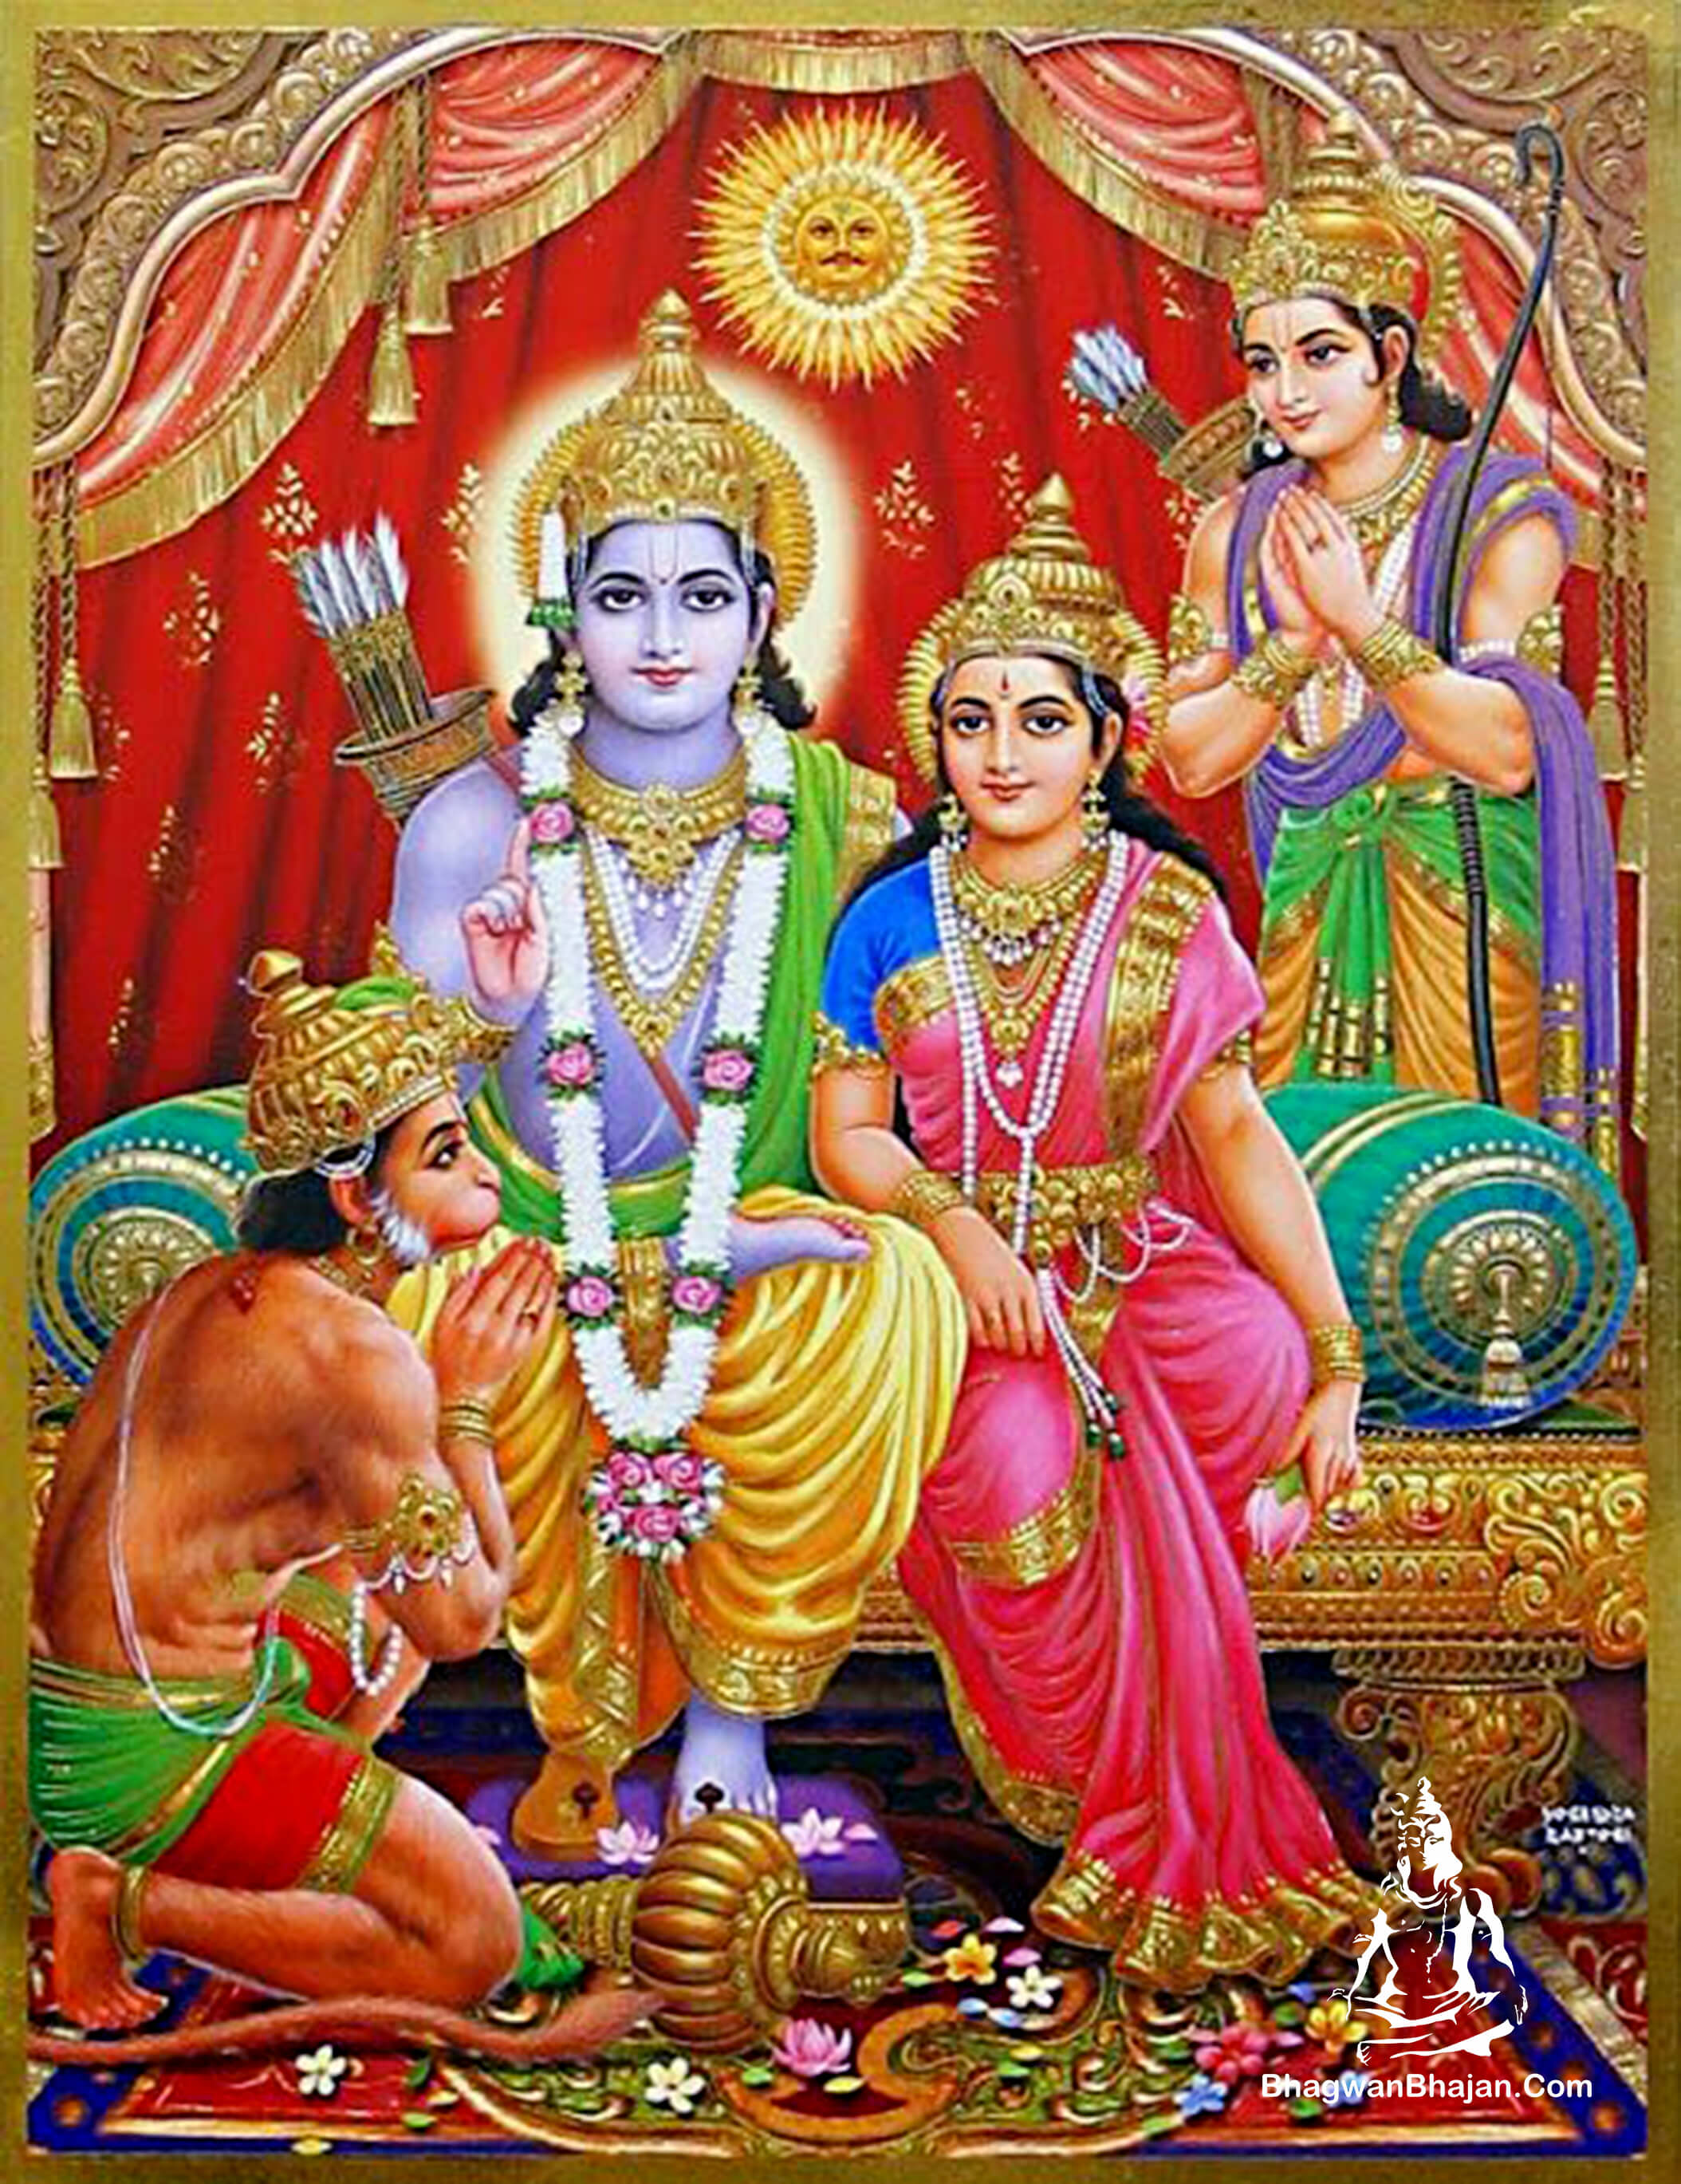 Shri Ram Ji Ki Photo Full HD Wallpaper Image [ Download ]